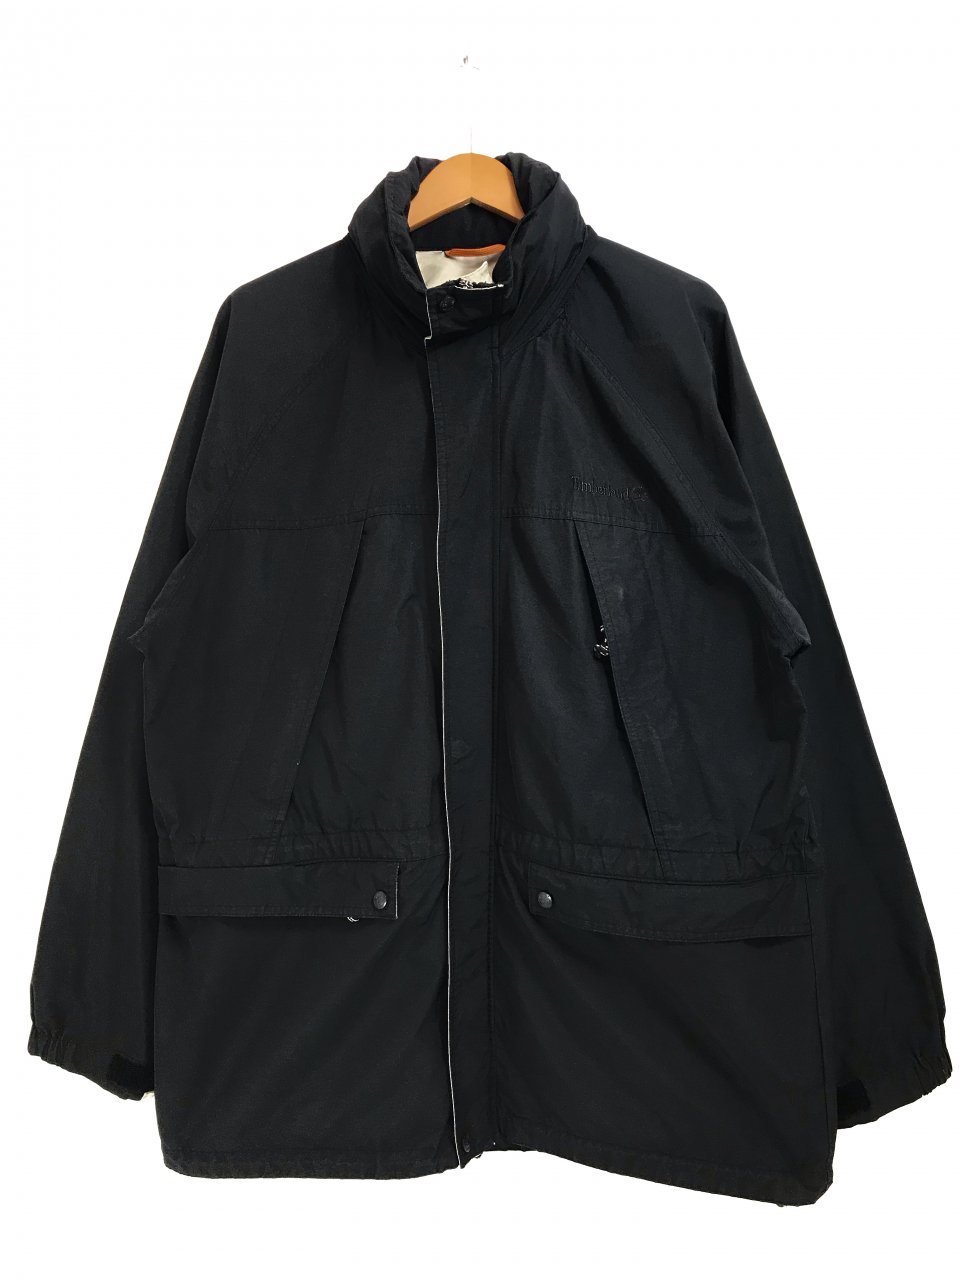 00s Timberland WEATHERGEAR Cotton-Nylon Field Jacket 黒 L 05年製 ティンバーランド  ナイロンジャケット マウンテンパーカー ブラック - NEWJOKE ONLINE STORE